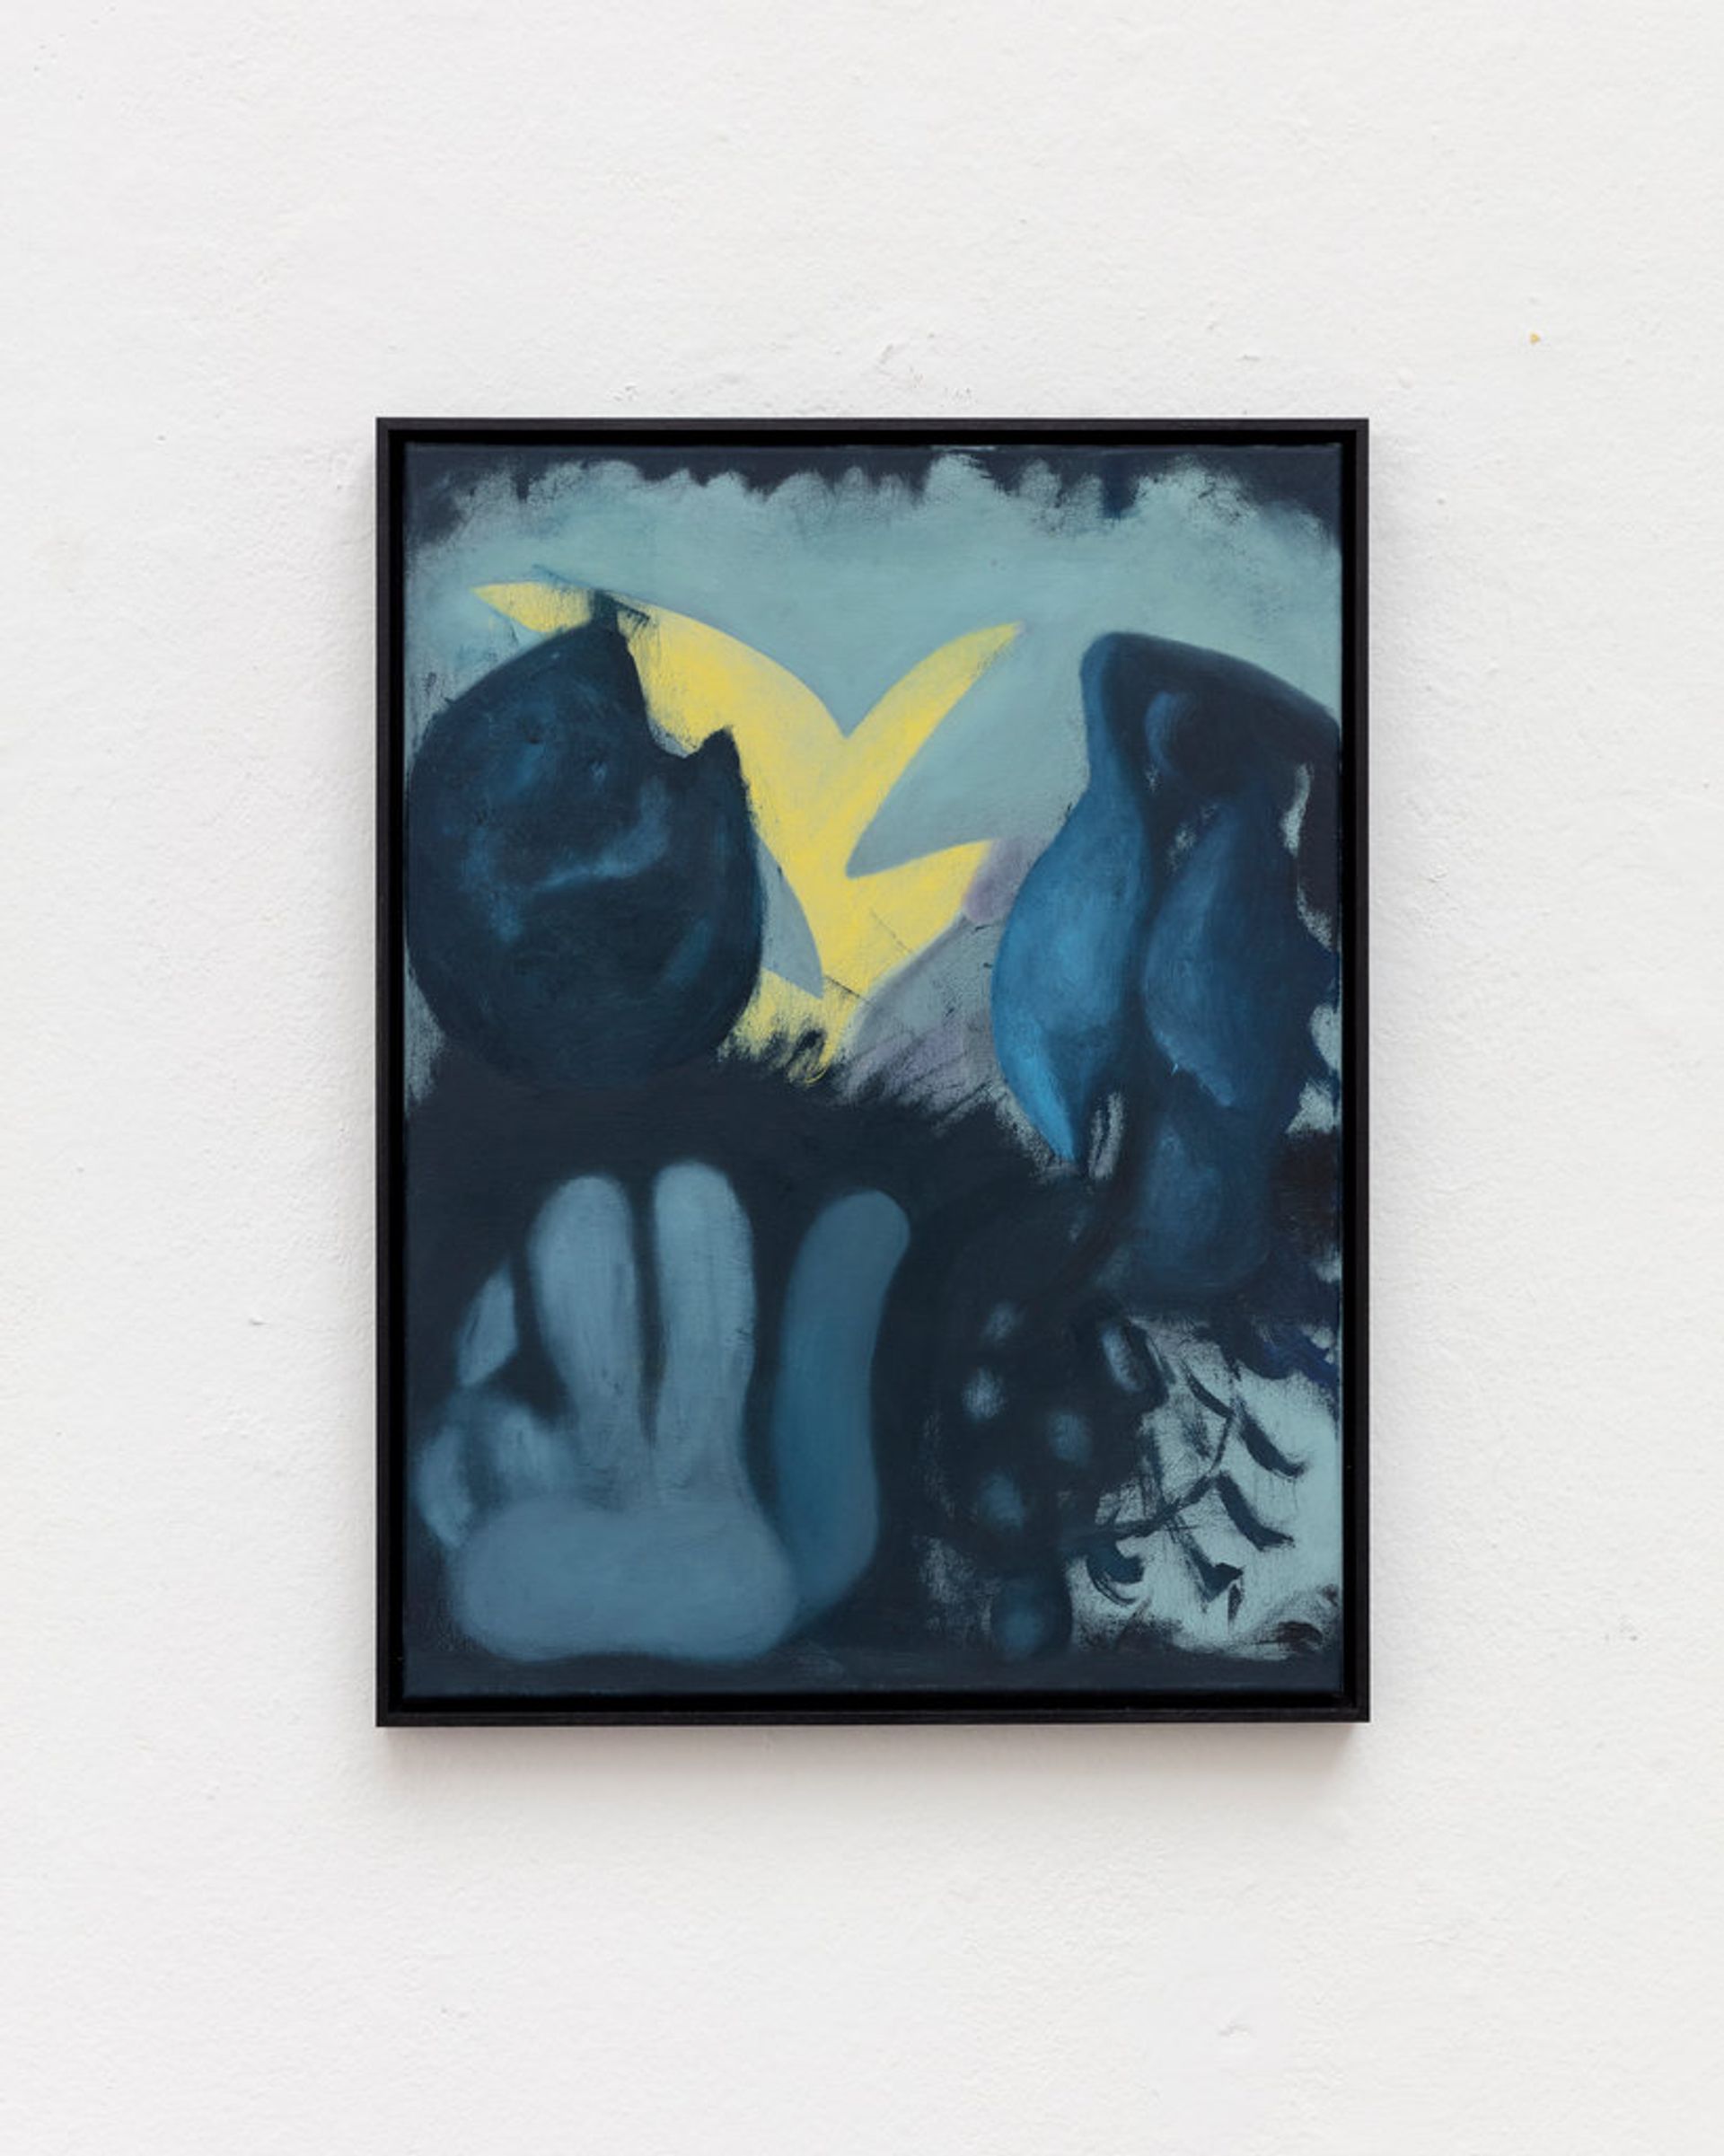 Veronika Hilger, Untitled, 2020, oil on canvas, 60 × 45 cm